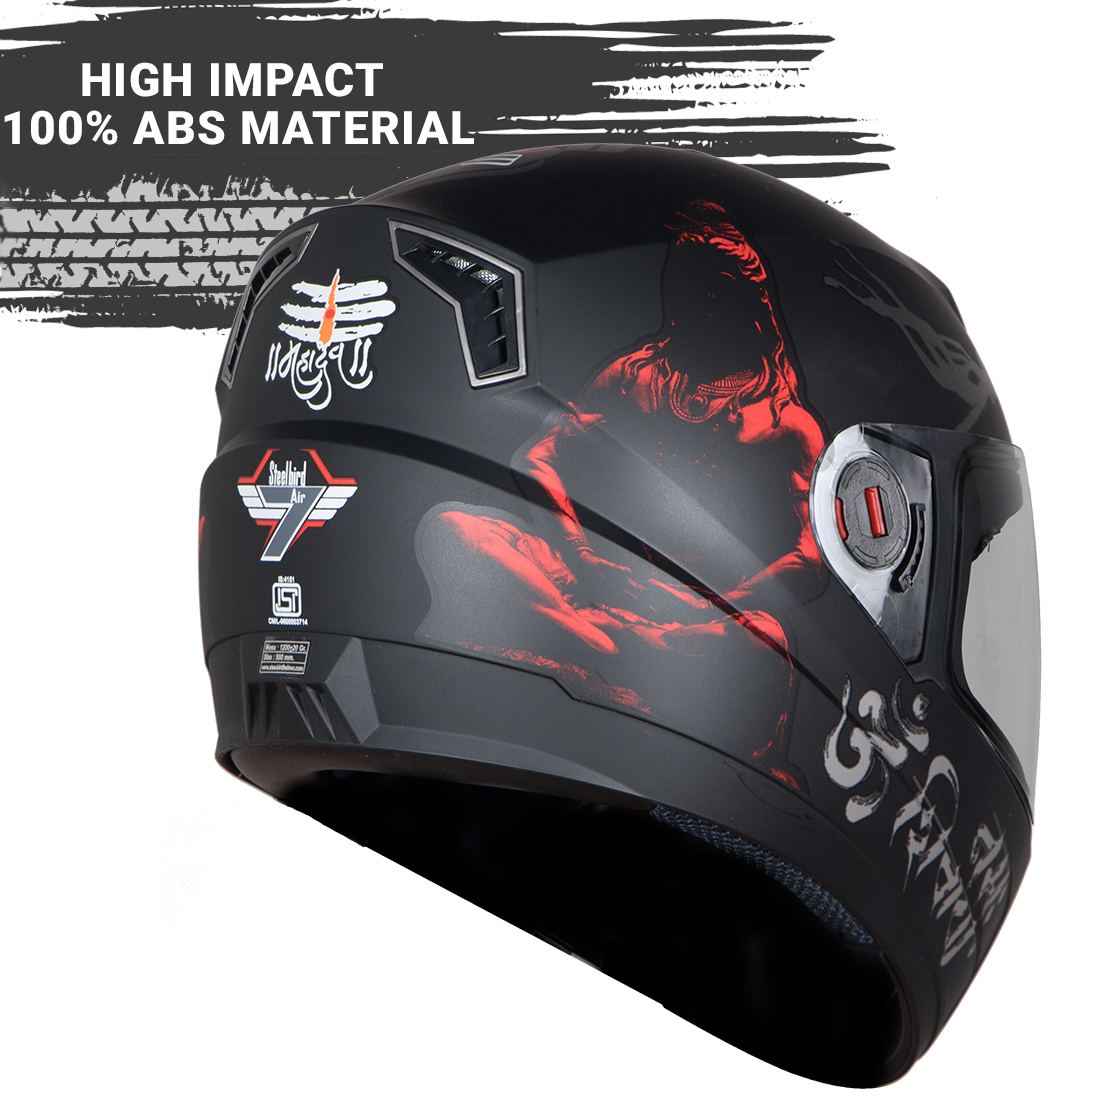 Steelbird SBA-1 Mahadev Full Face ISI Certified Graphic Helmet (Matt Black Red With Clear Visor)